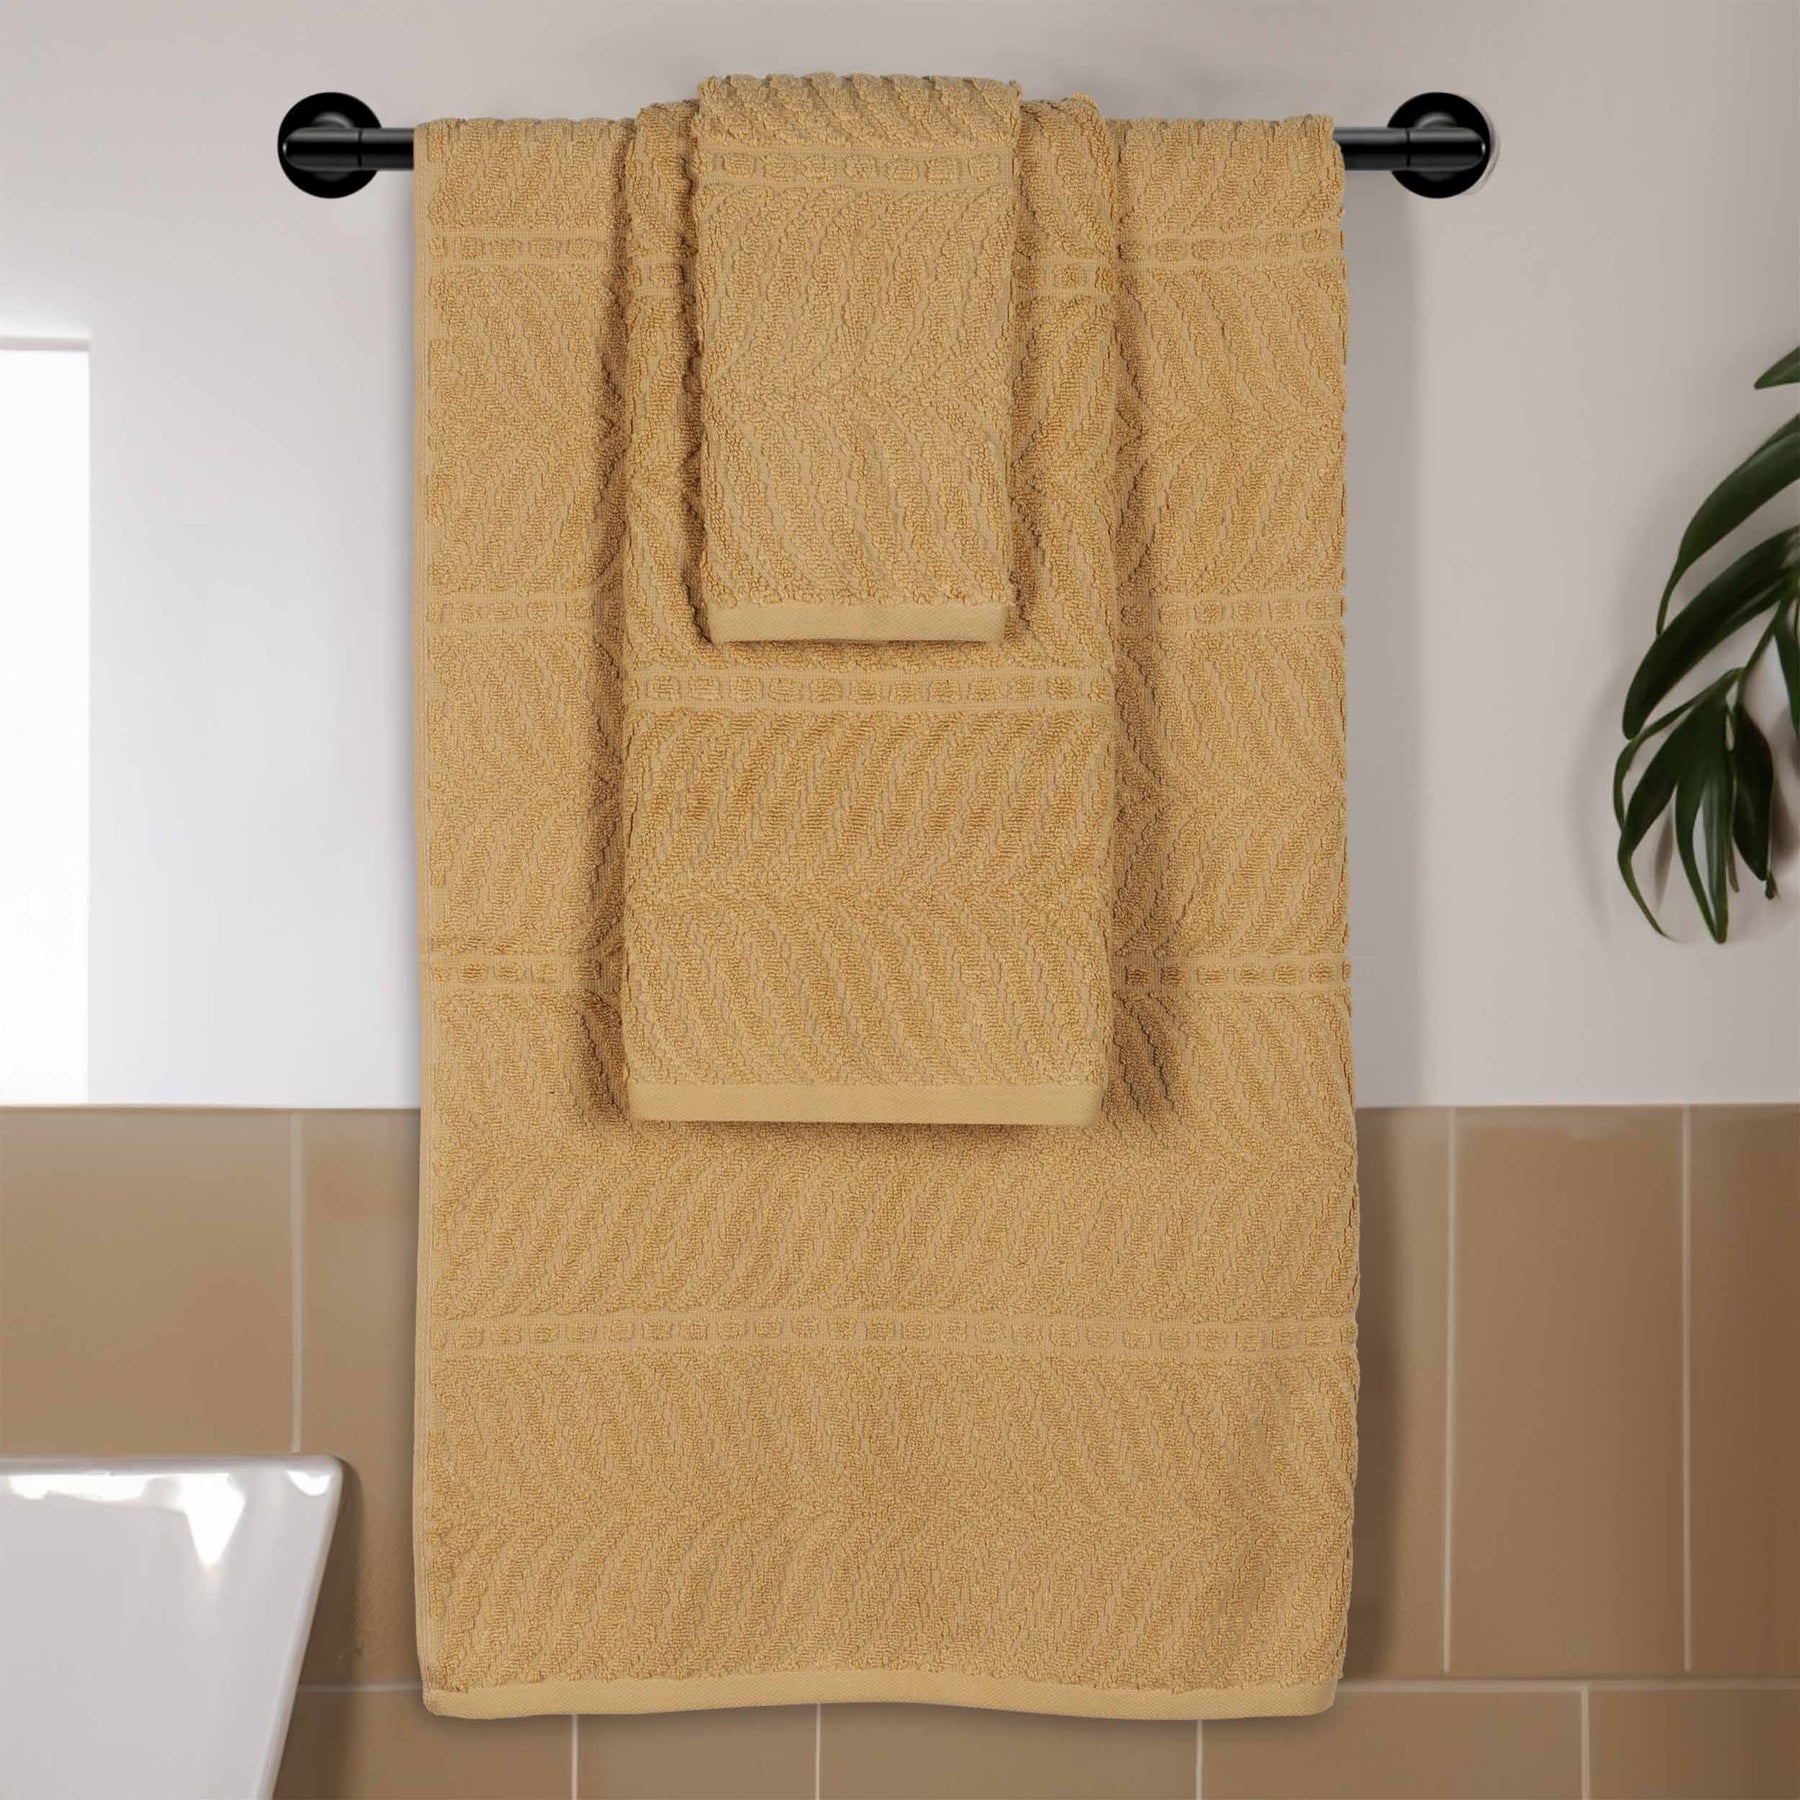 Chevron Zero Twist Cotton 3 Piece Jacquard Towel Set - Gold